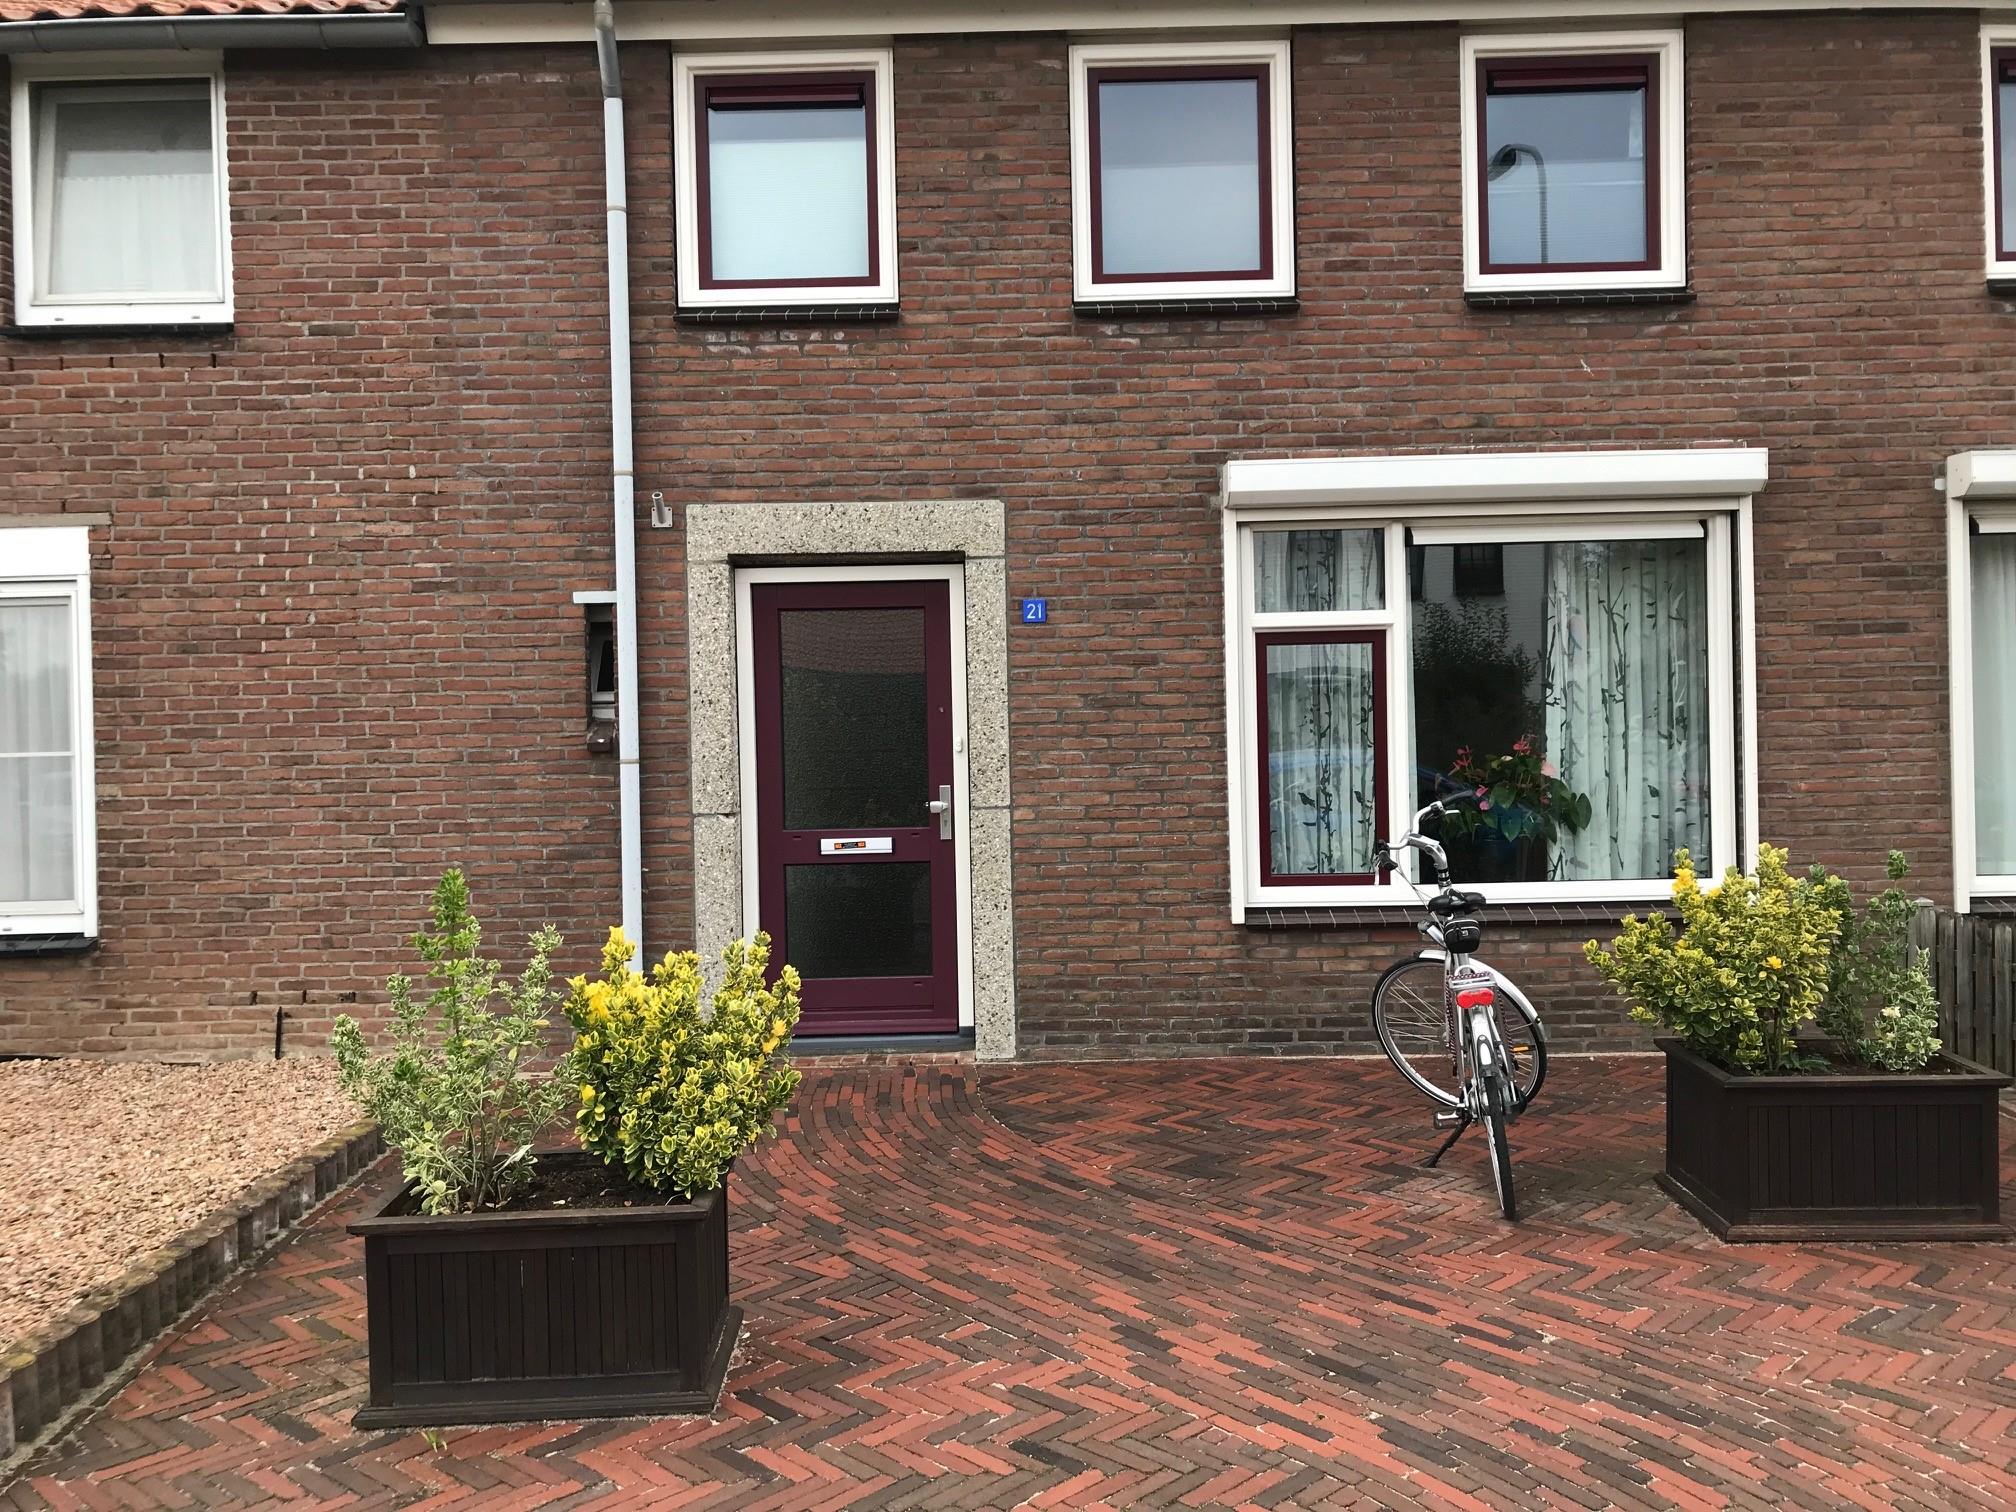 Pr. Beatrixstraat 21, 6576 AV Ooij, Nederland